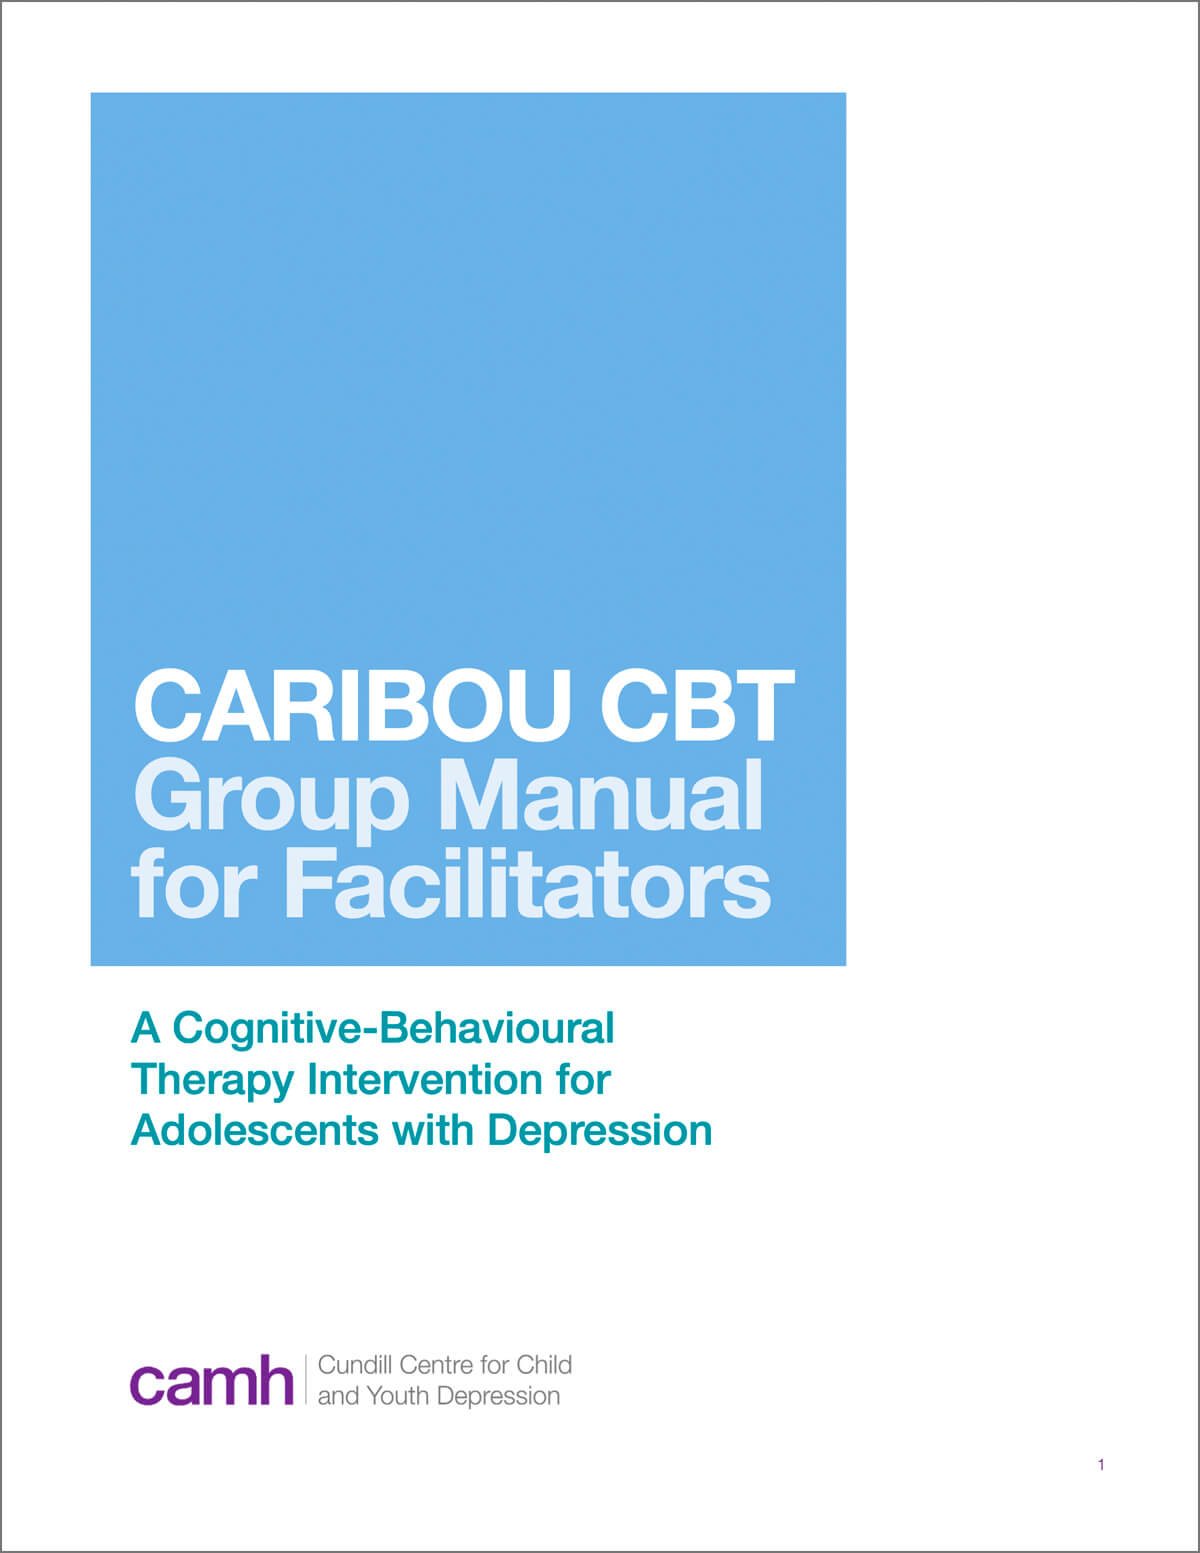 CARIBOU CBT - Group Manual for Facilitators cover